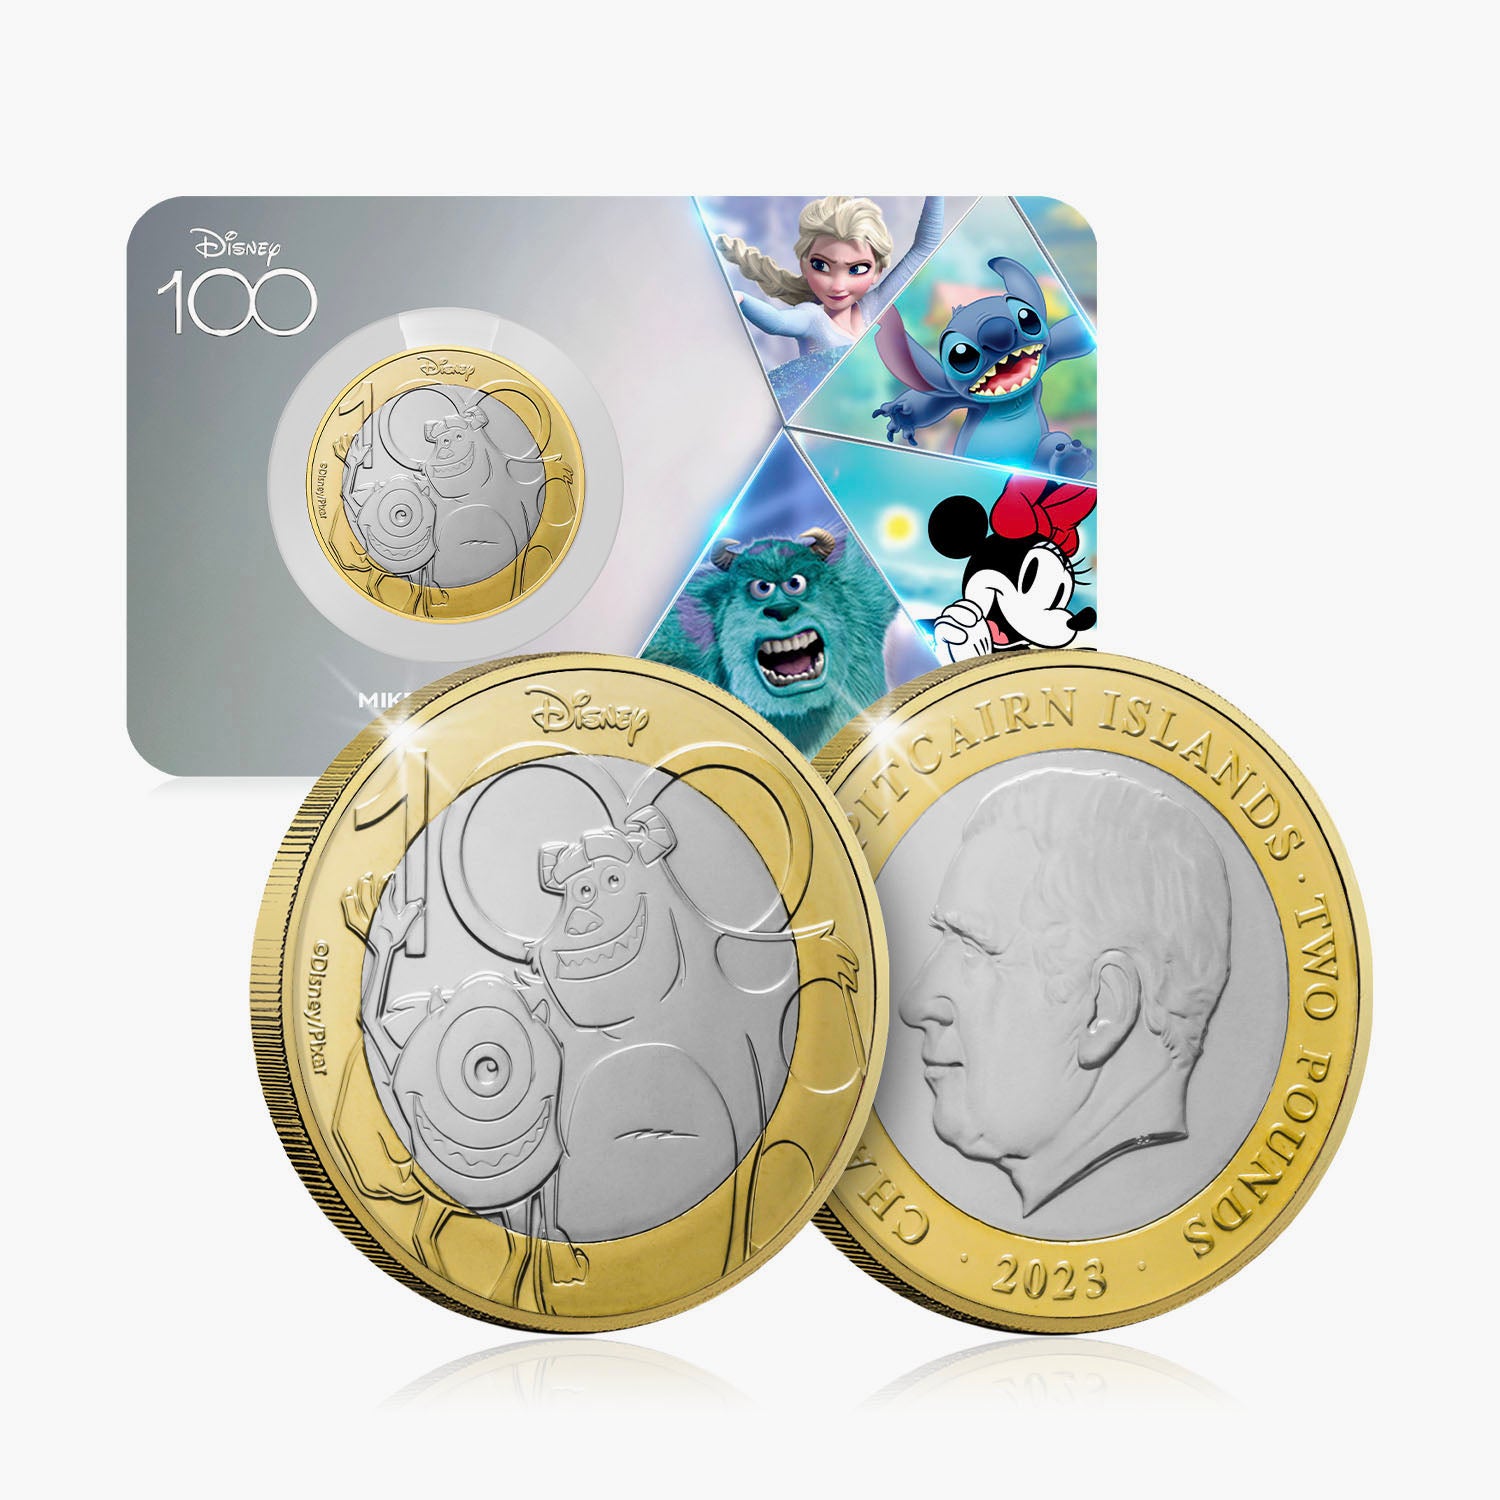 Disney 100th Anniversary Monsters Inc 2023 £2 BU Coin